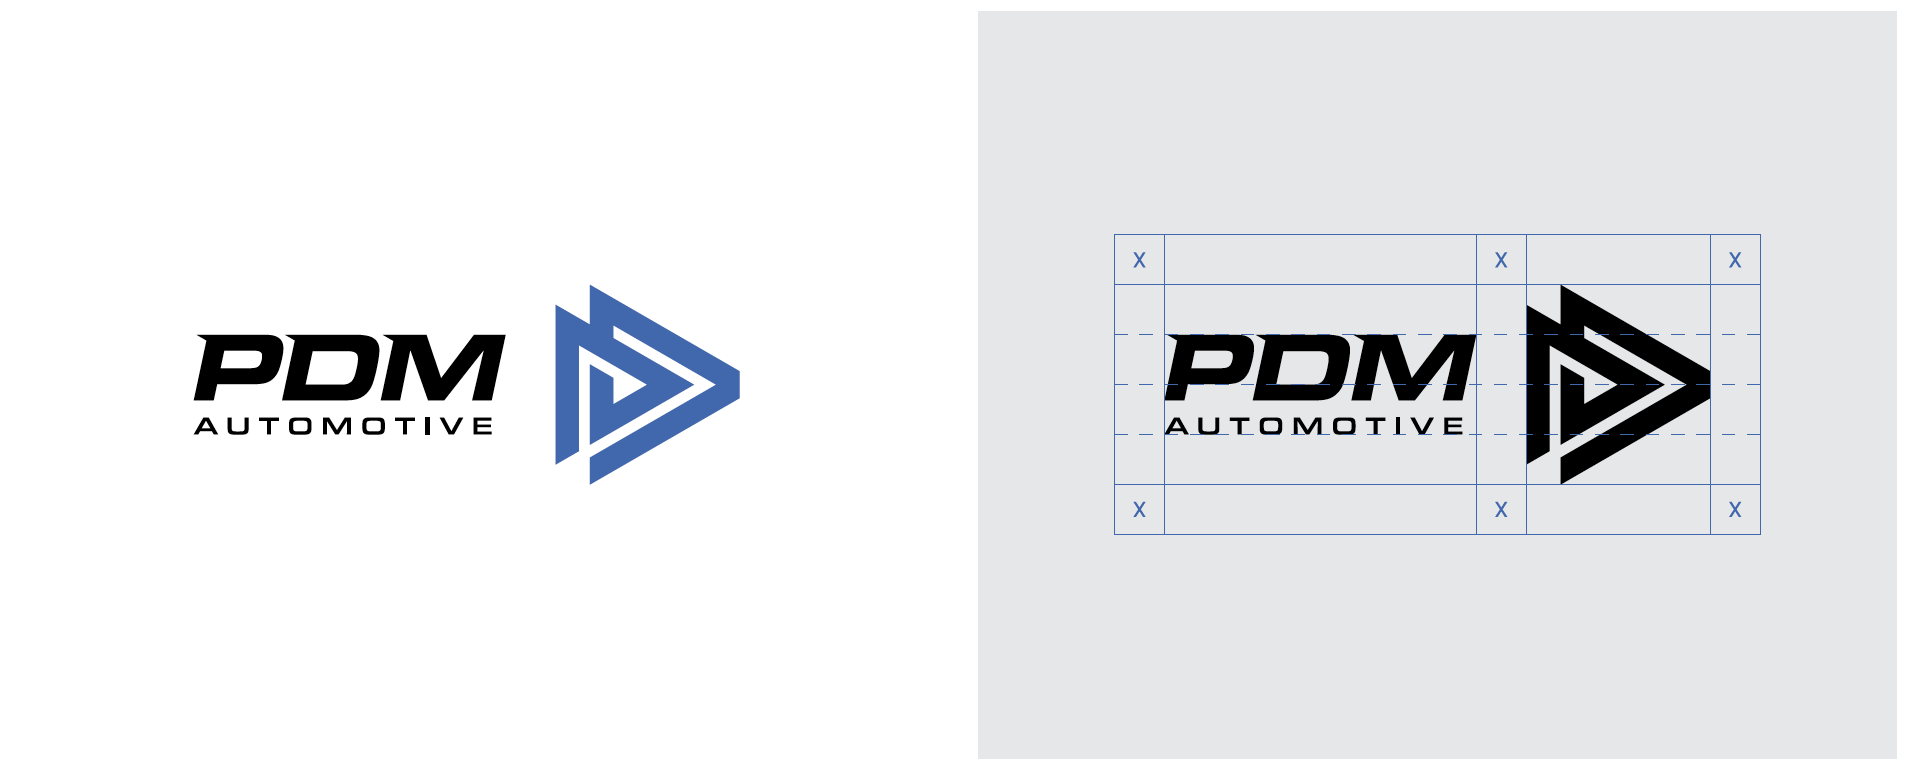 pdm new logo